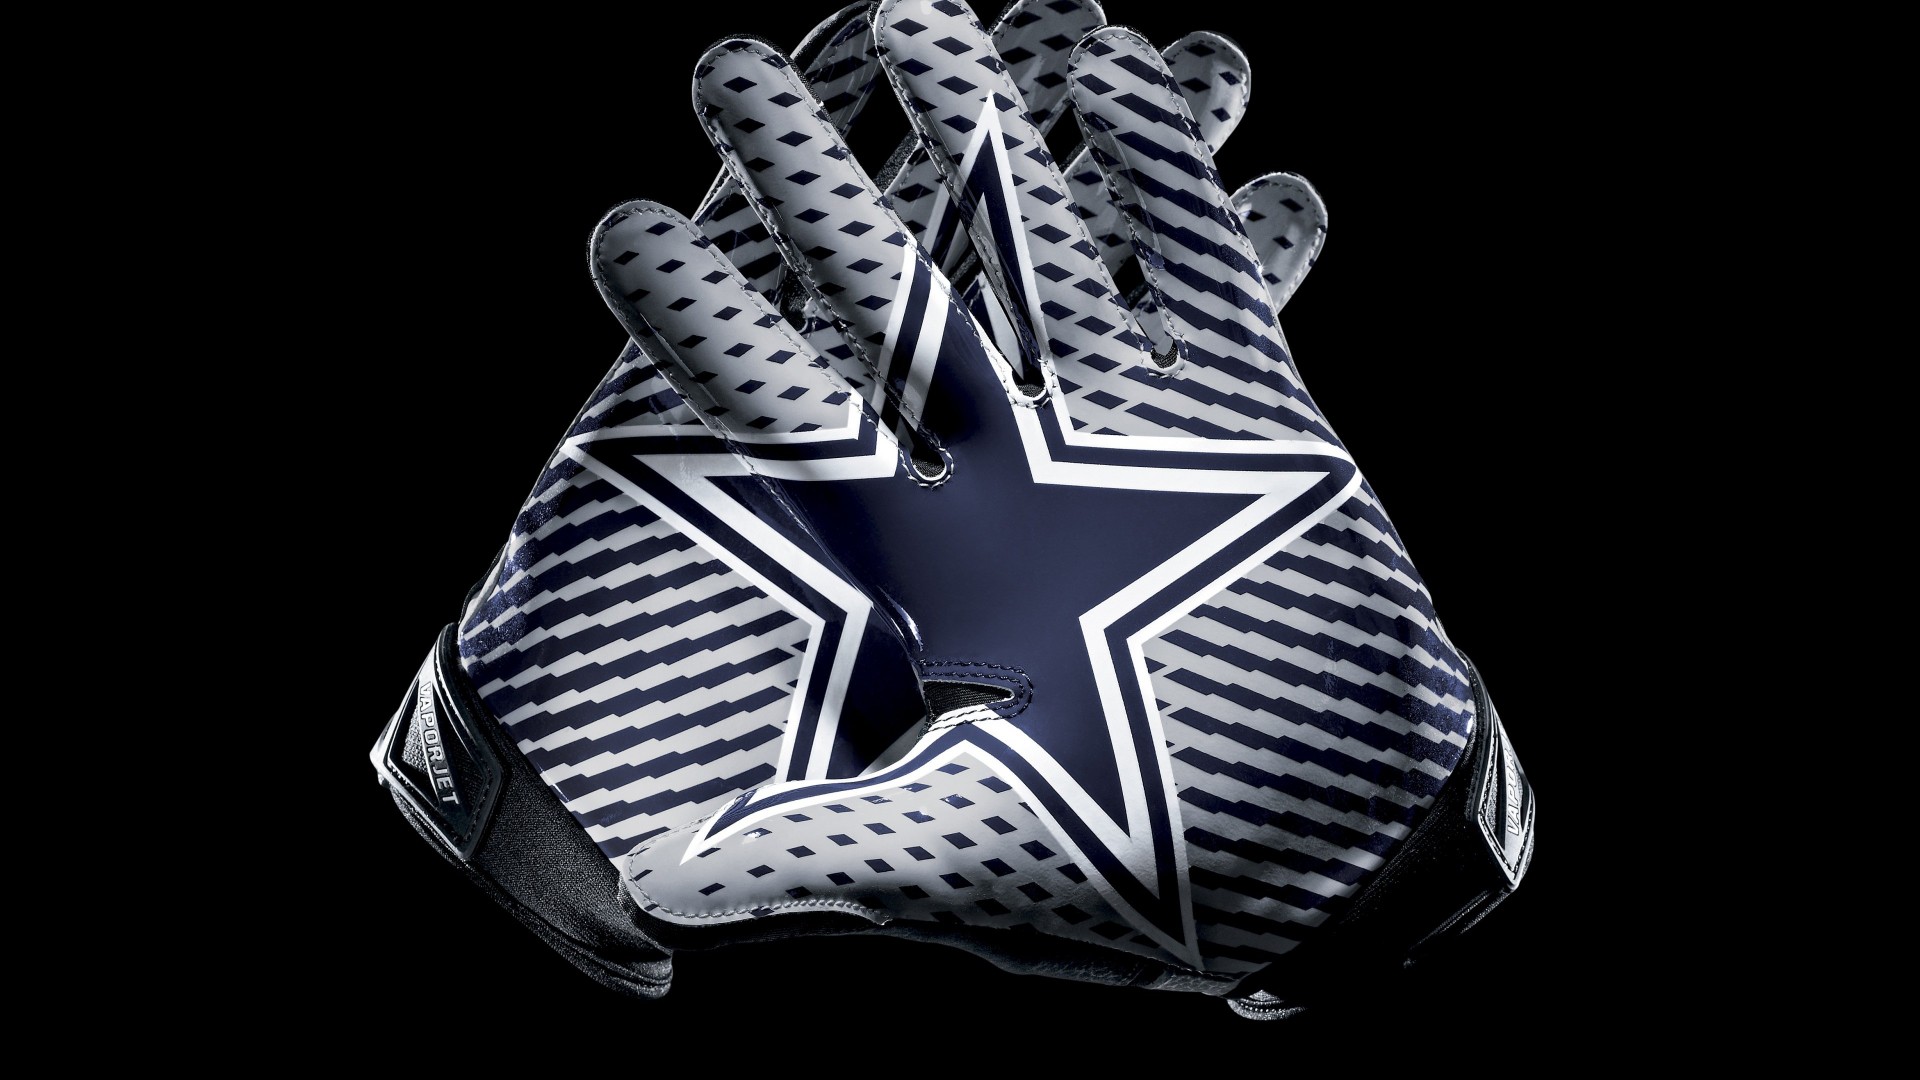 Dallas Cowboys Gloves Wallpaper for Desktop 1920x1080